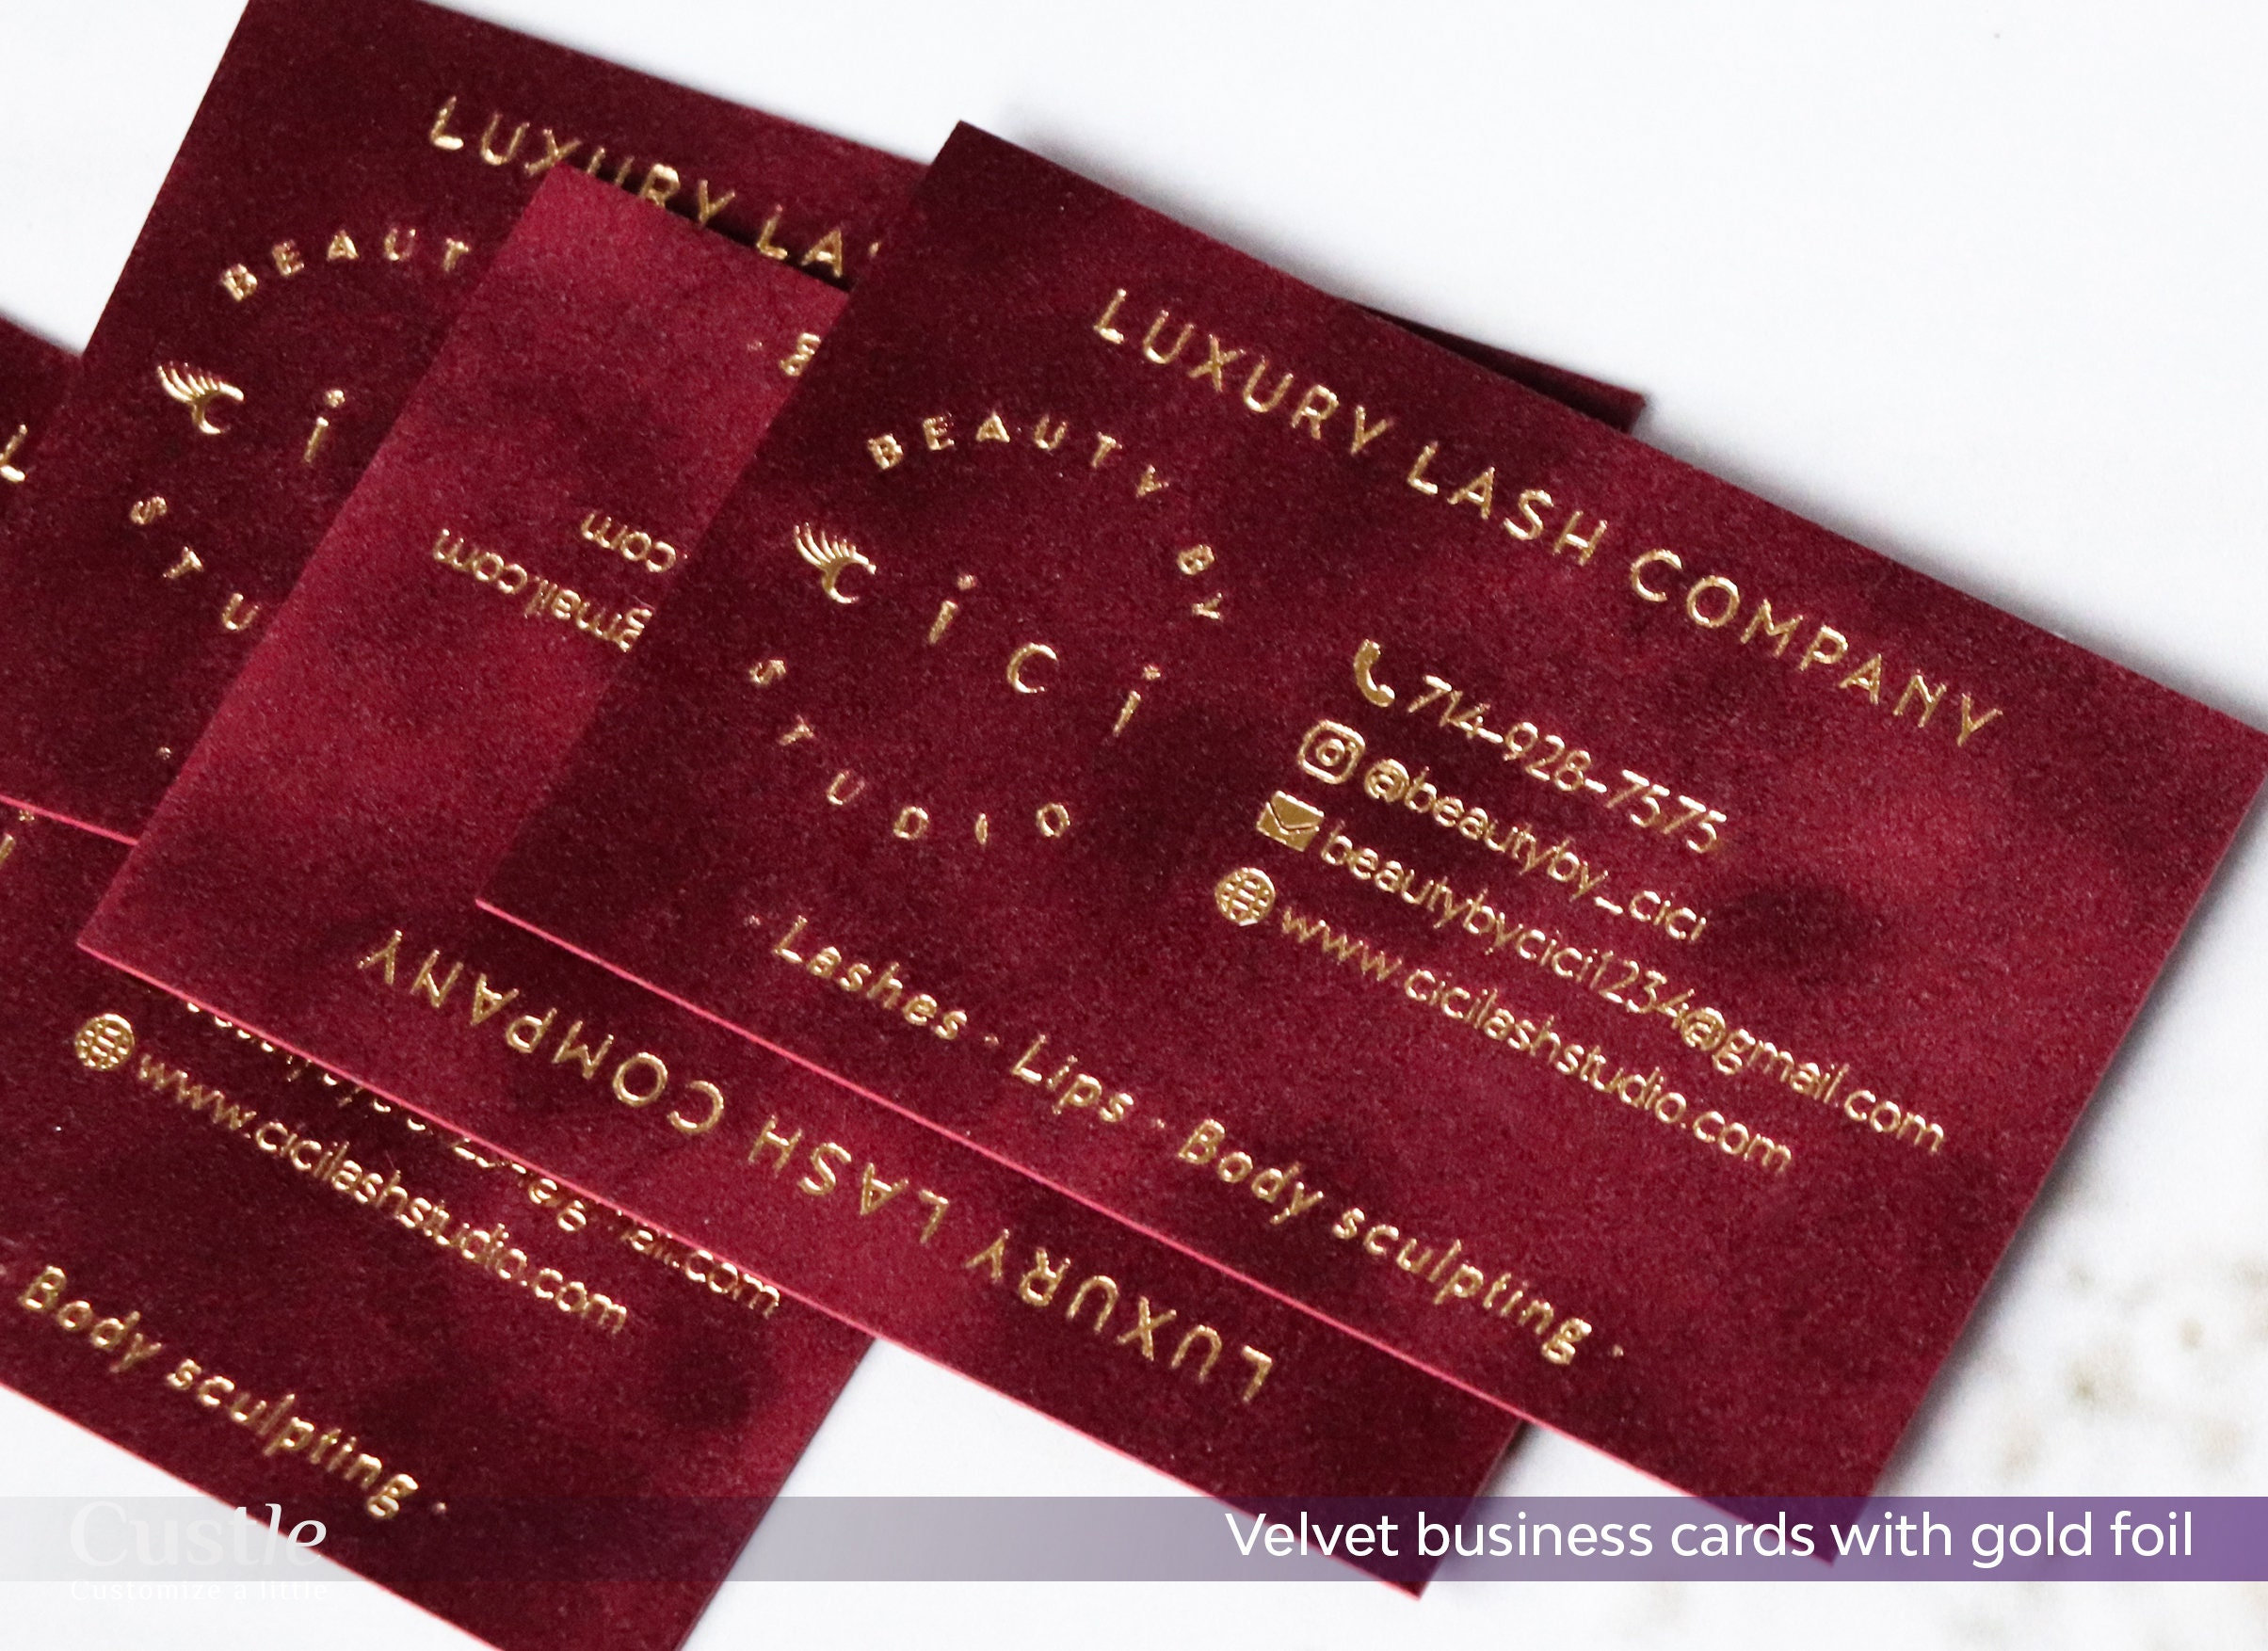 Black Custom Metal Business Cards, Gold Metal Business Cards